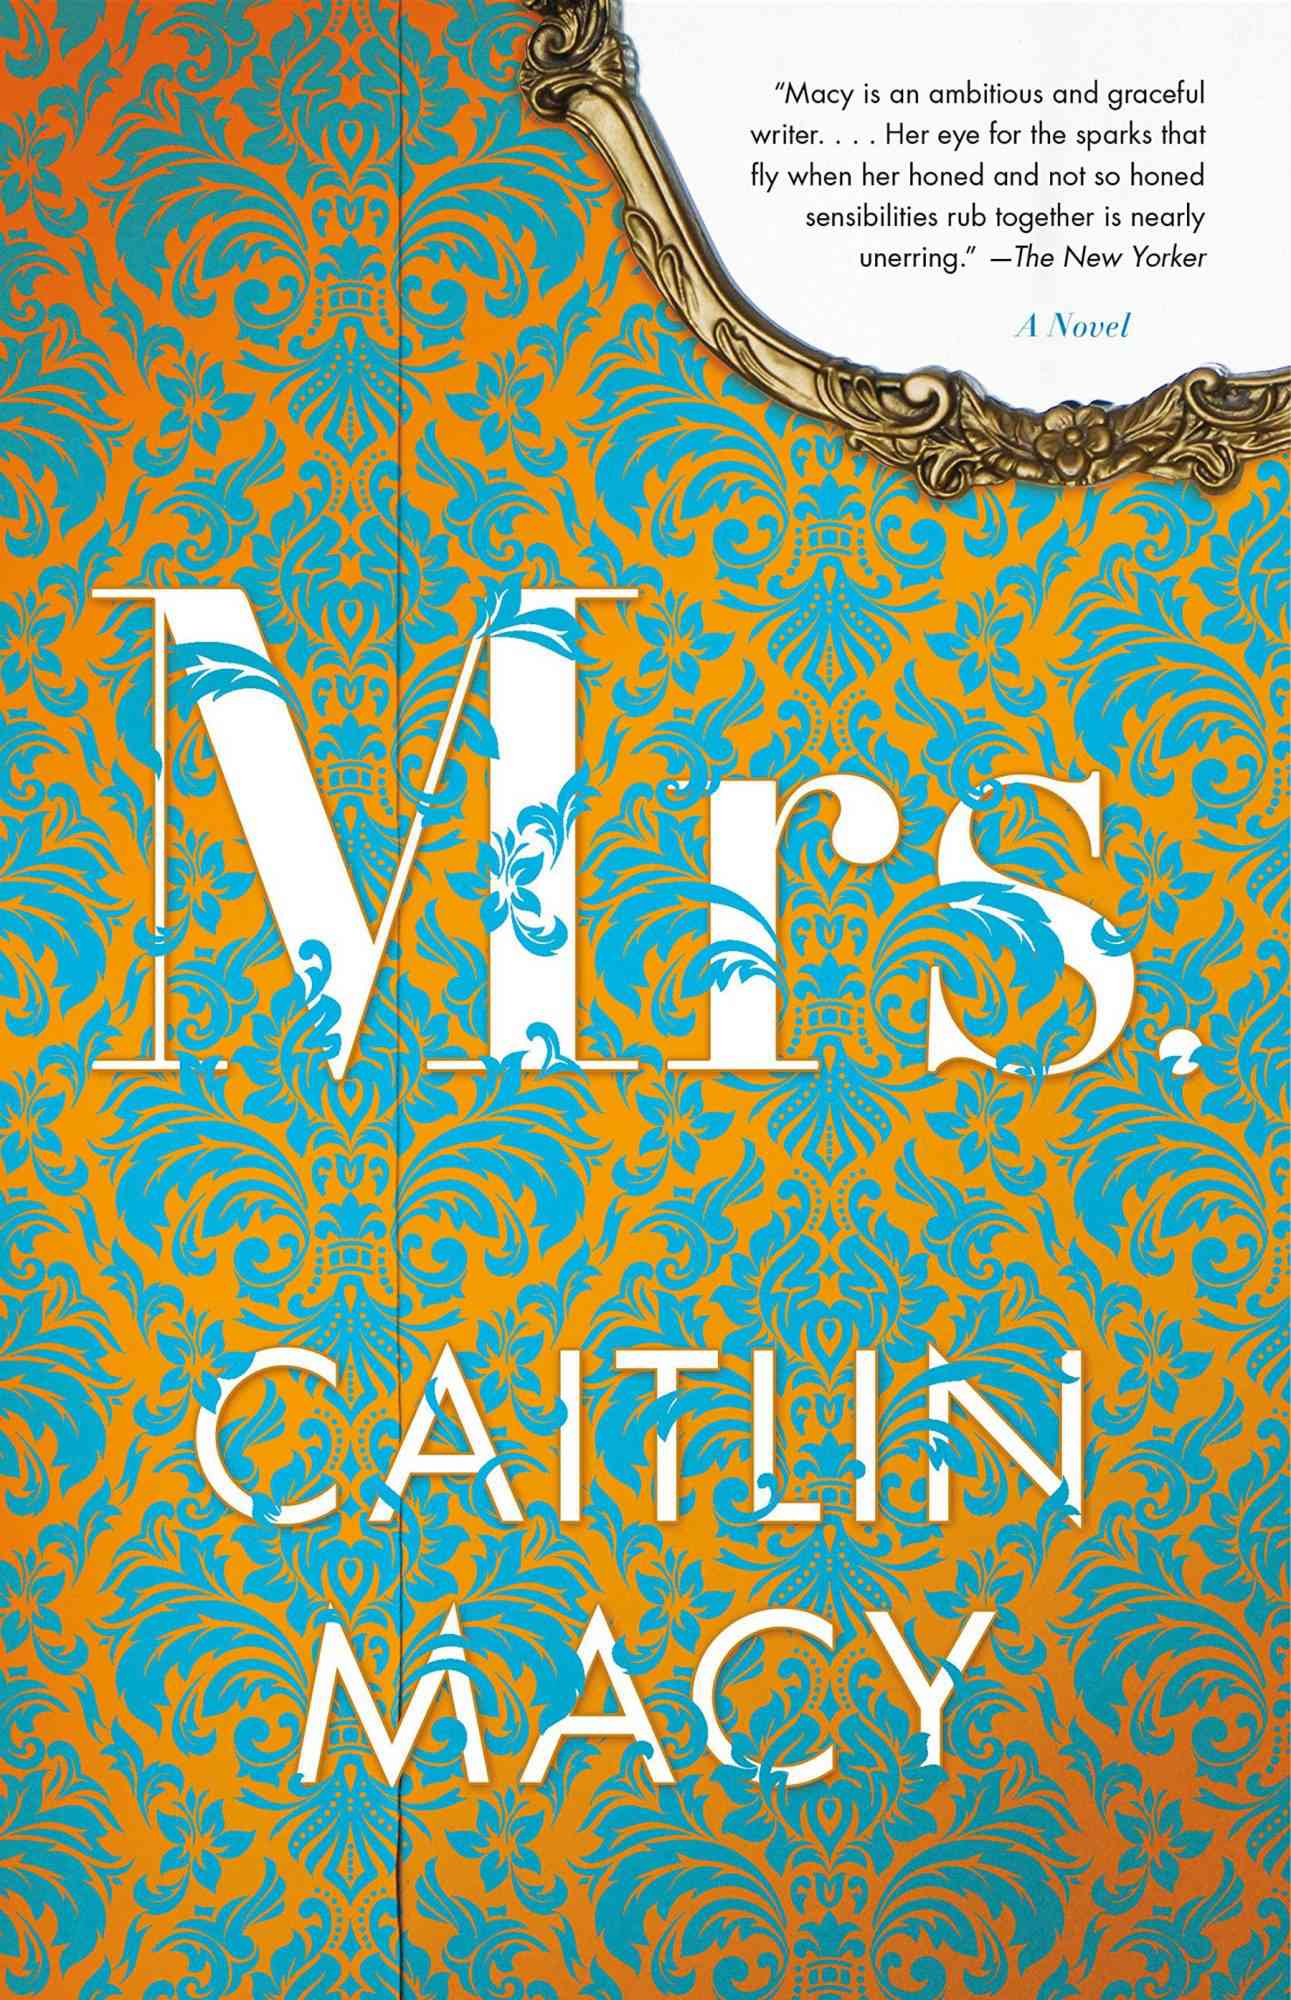 Mrs., by Caitlin Macy